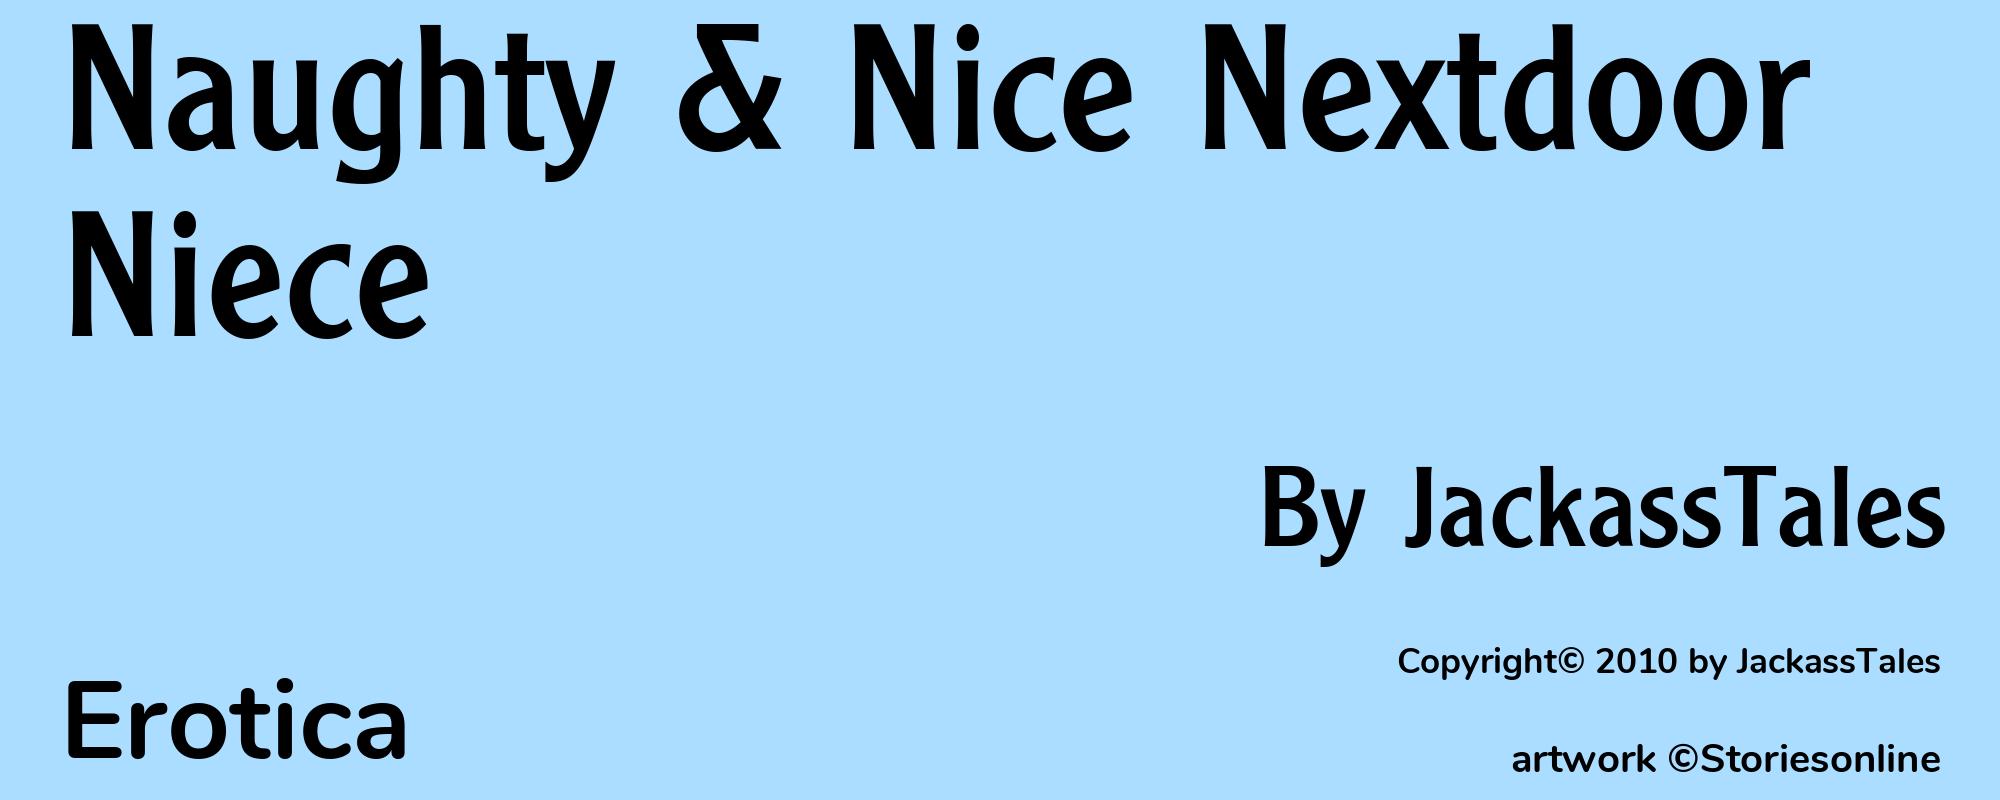 Naughty & Nice Nextdoor Niece - Cover